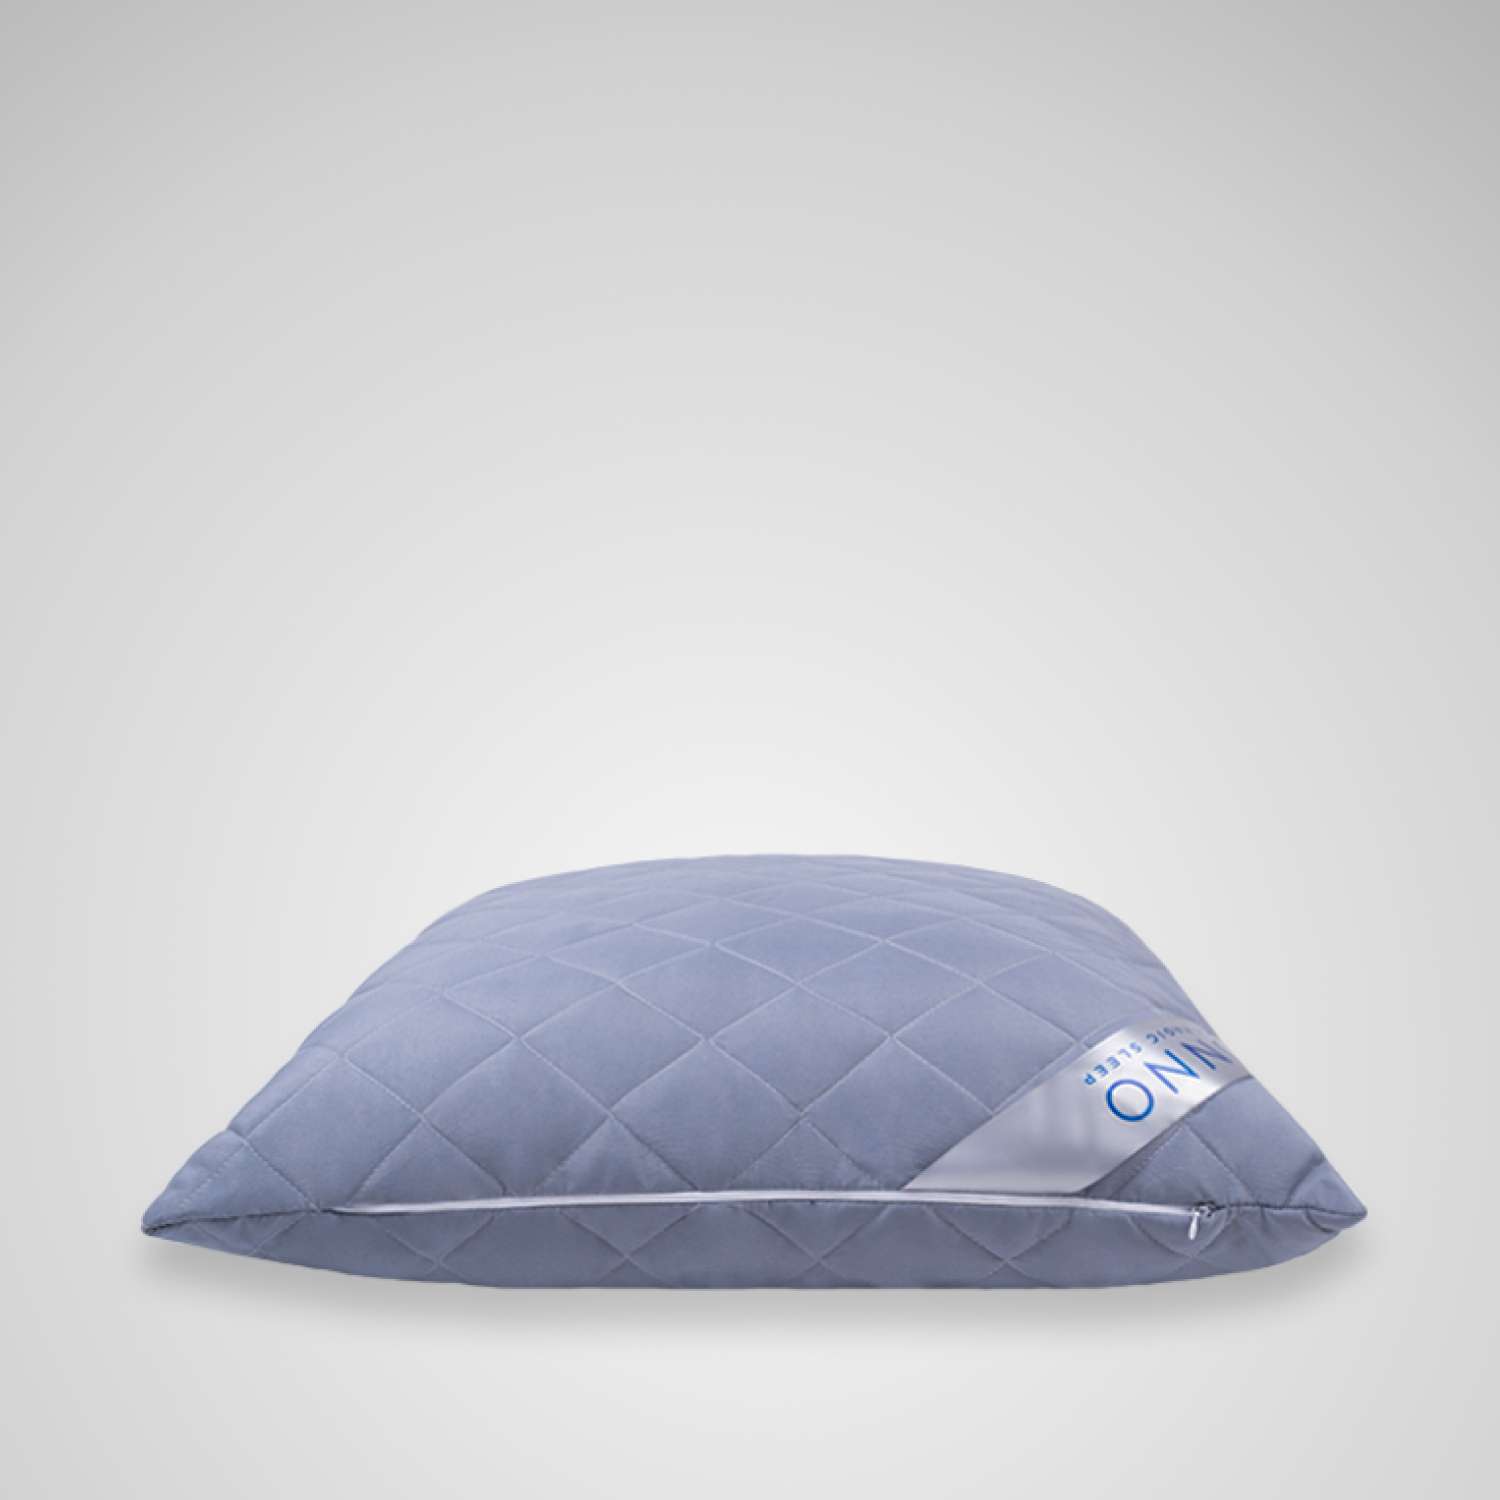 Подушка для сна SONNO AURA 70x70 см Amicor TM Цвет Французский серый - фото 4